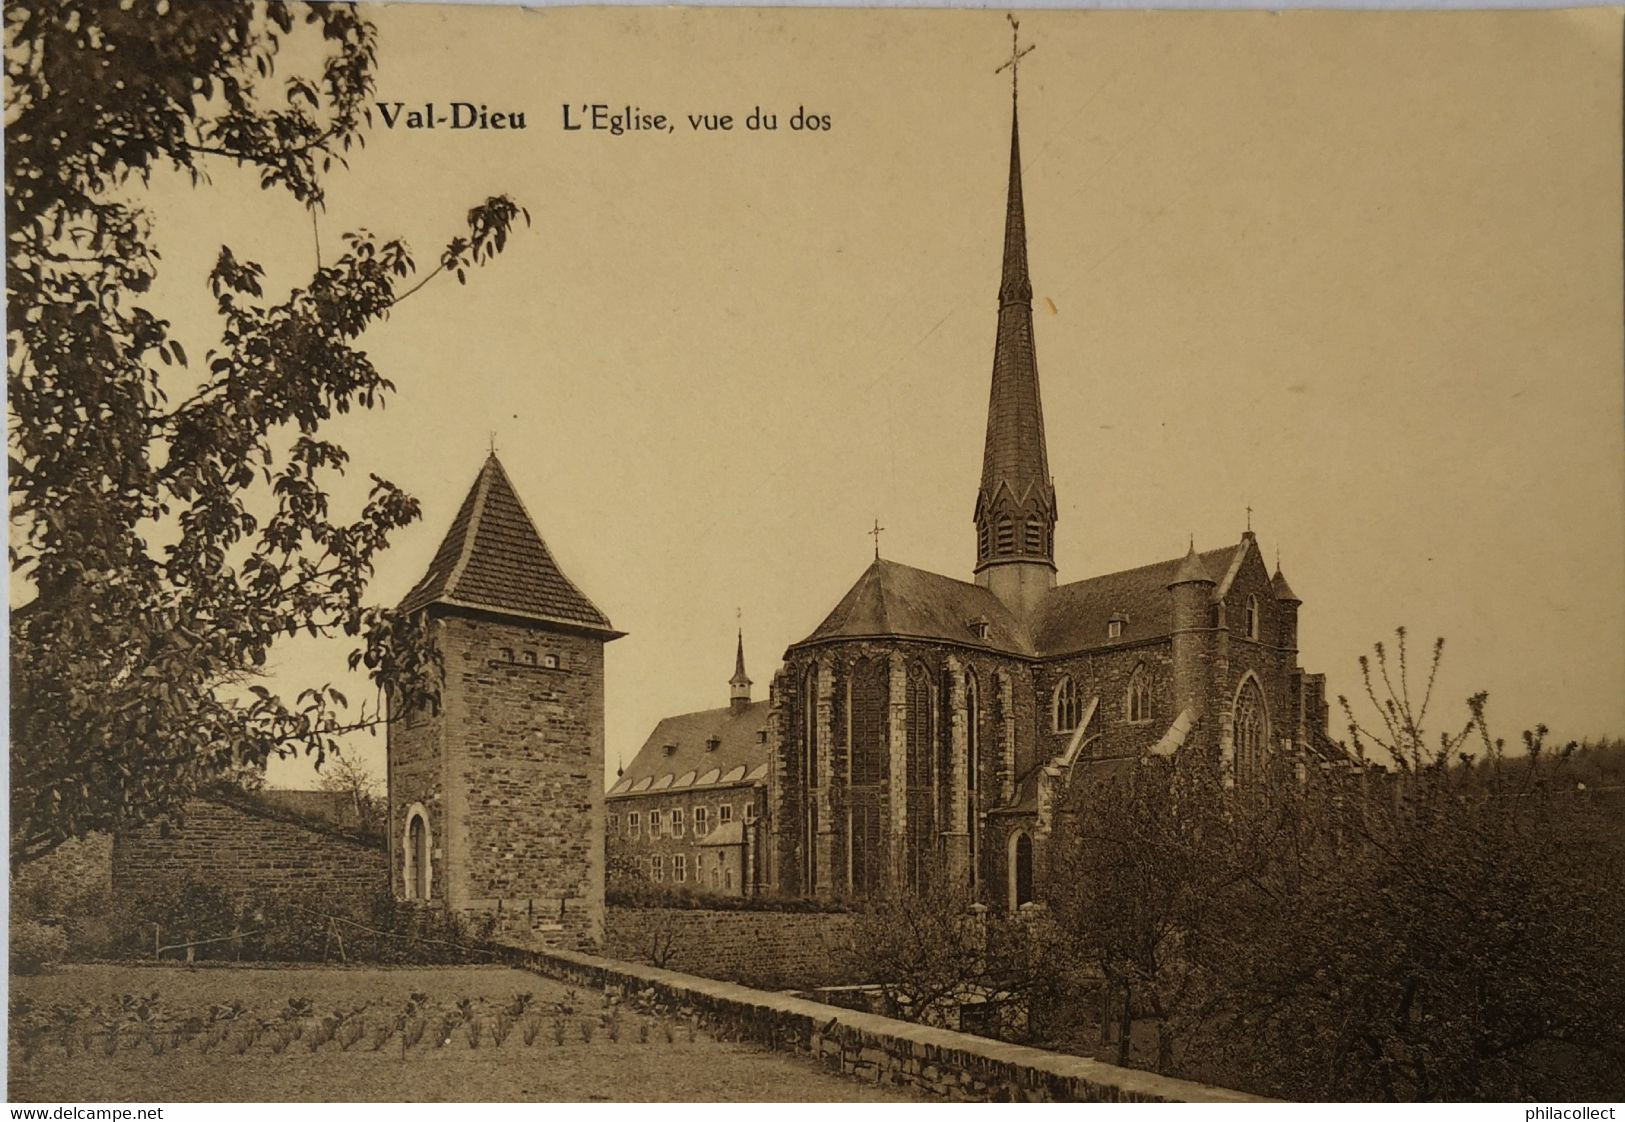 Val Dieu (Aubel) Eglise Vue Du Dos 19?? - Flobecq - Vloesberg